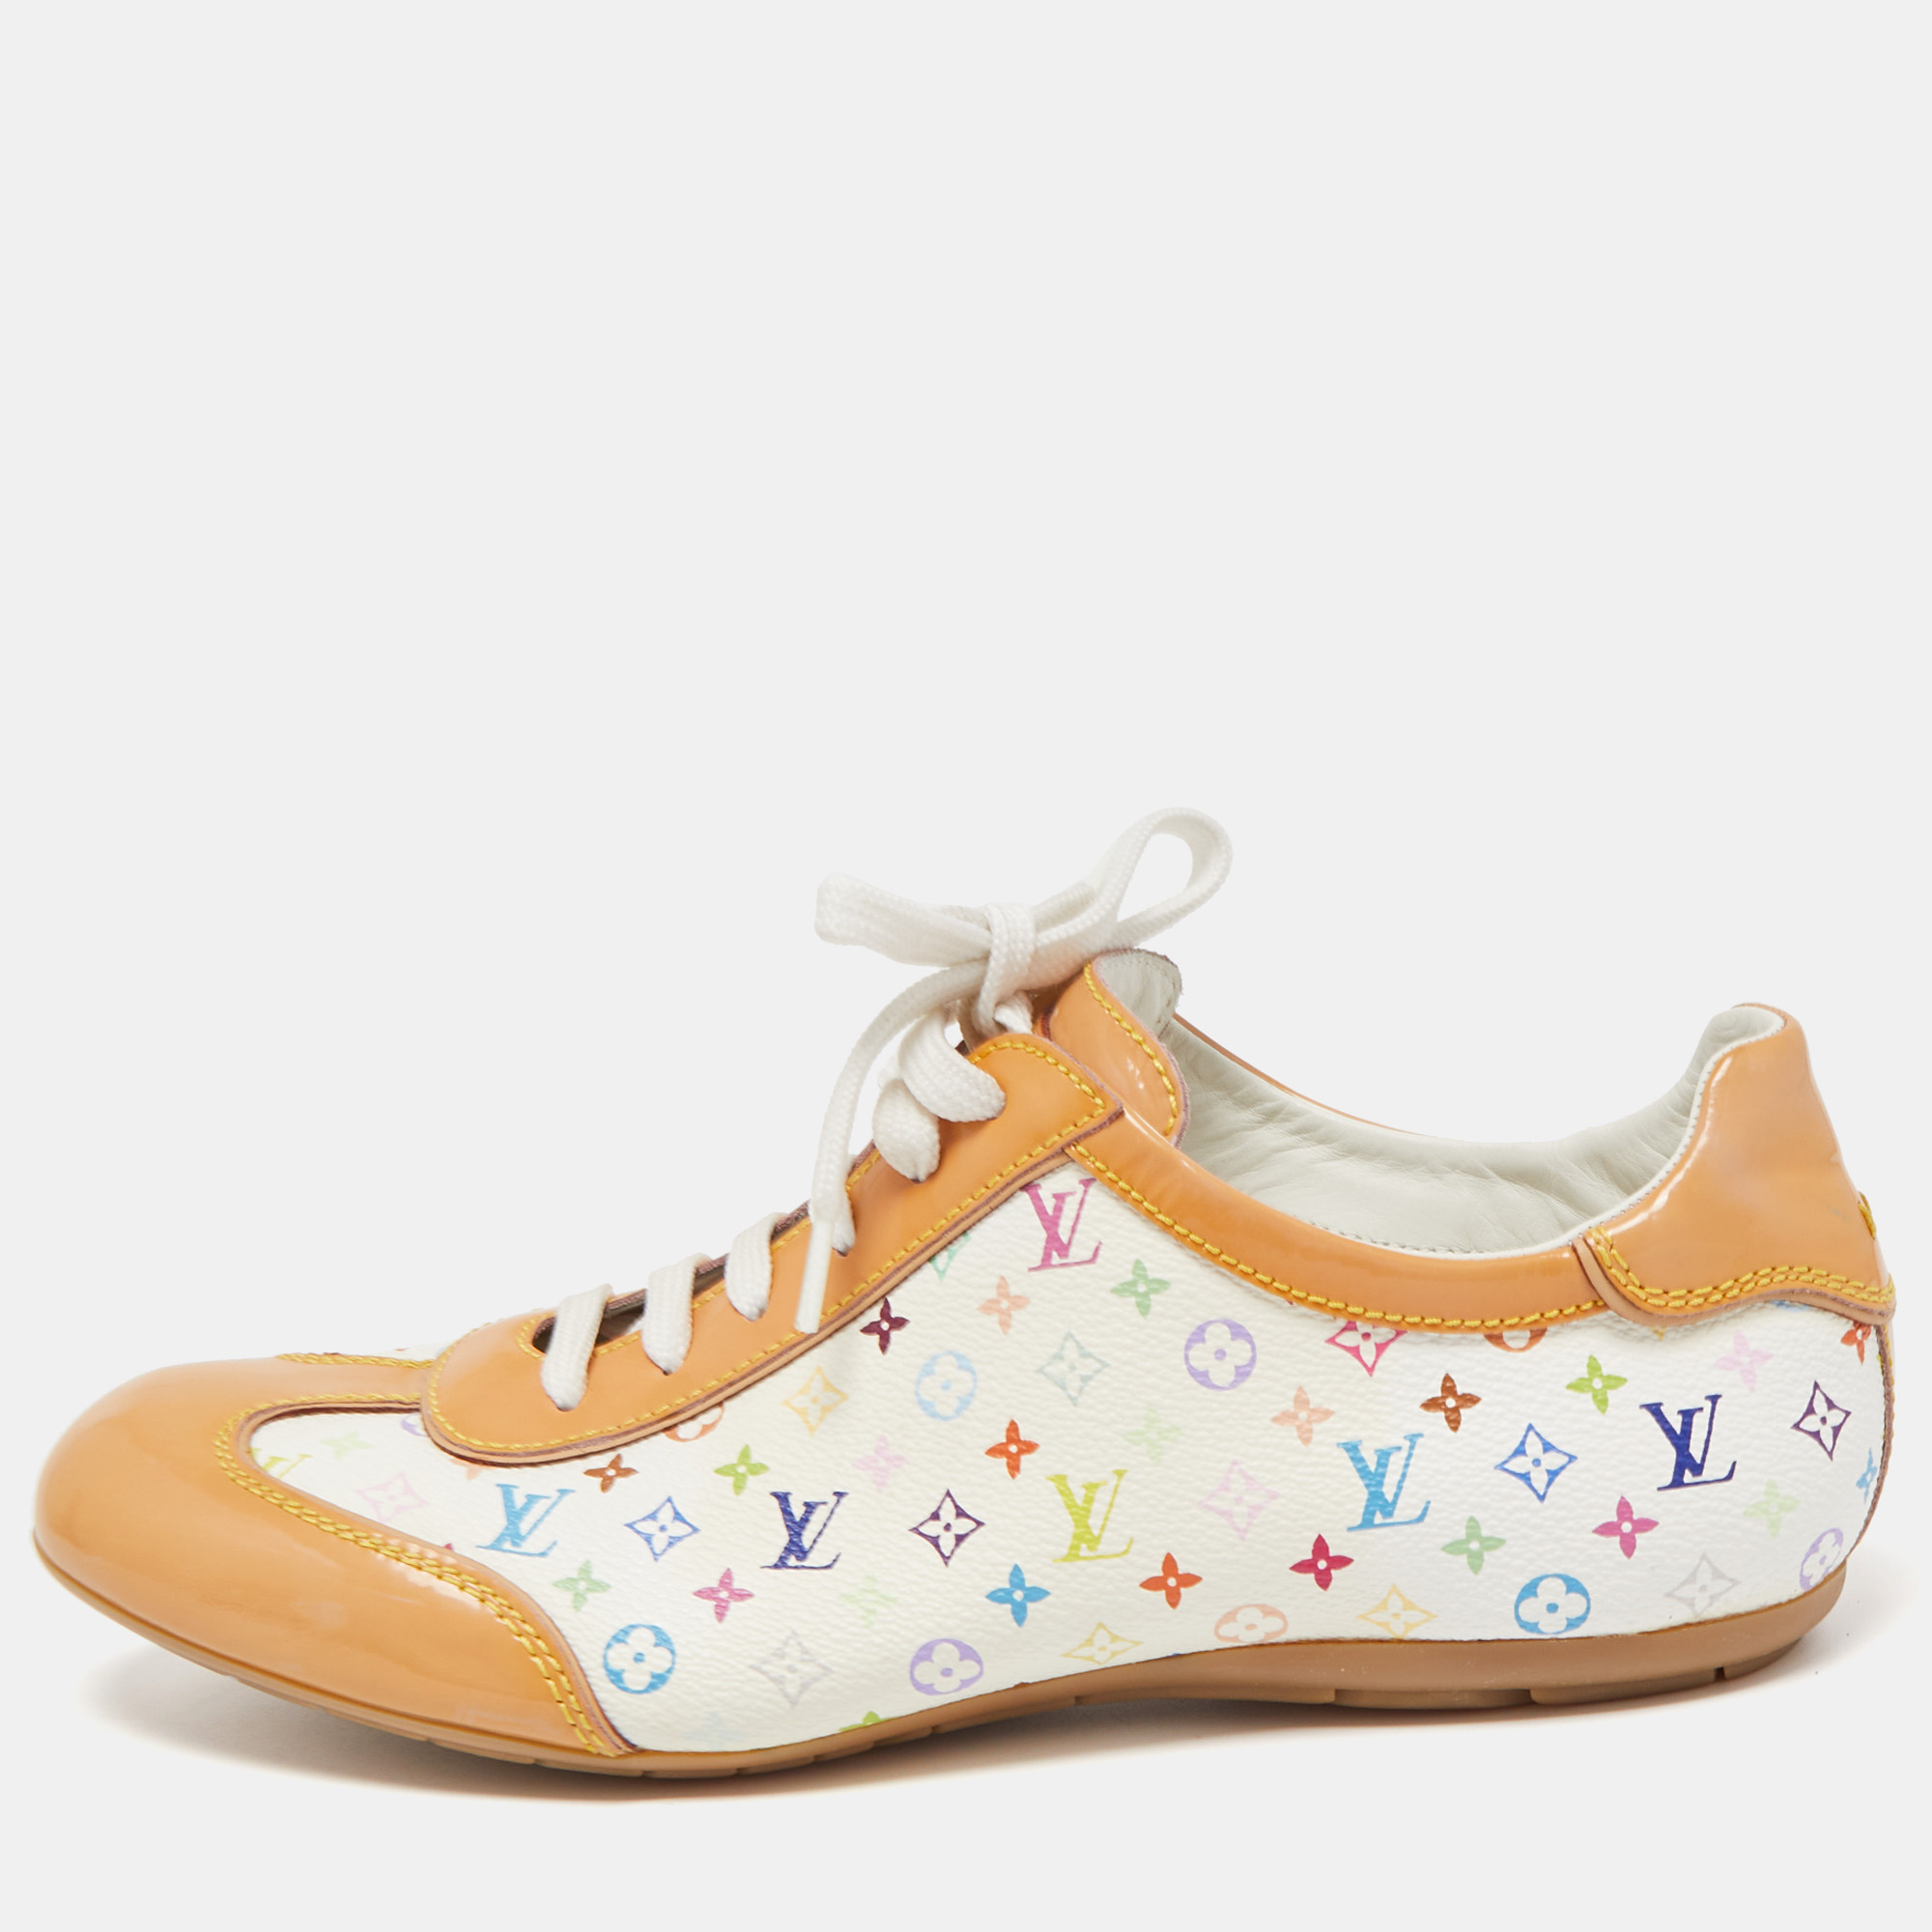 Louis Vuitton Monogram Multicolor High Top Sneakers Size 38.5